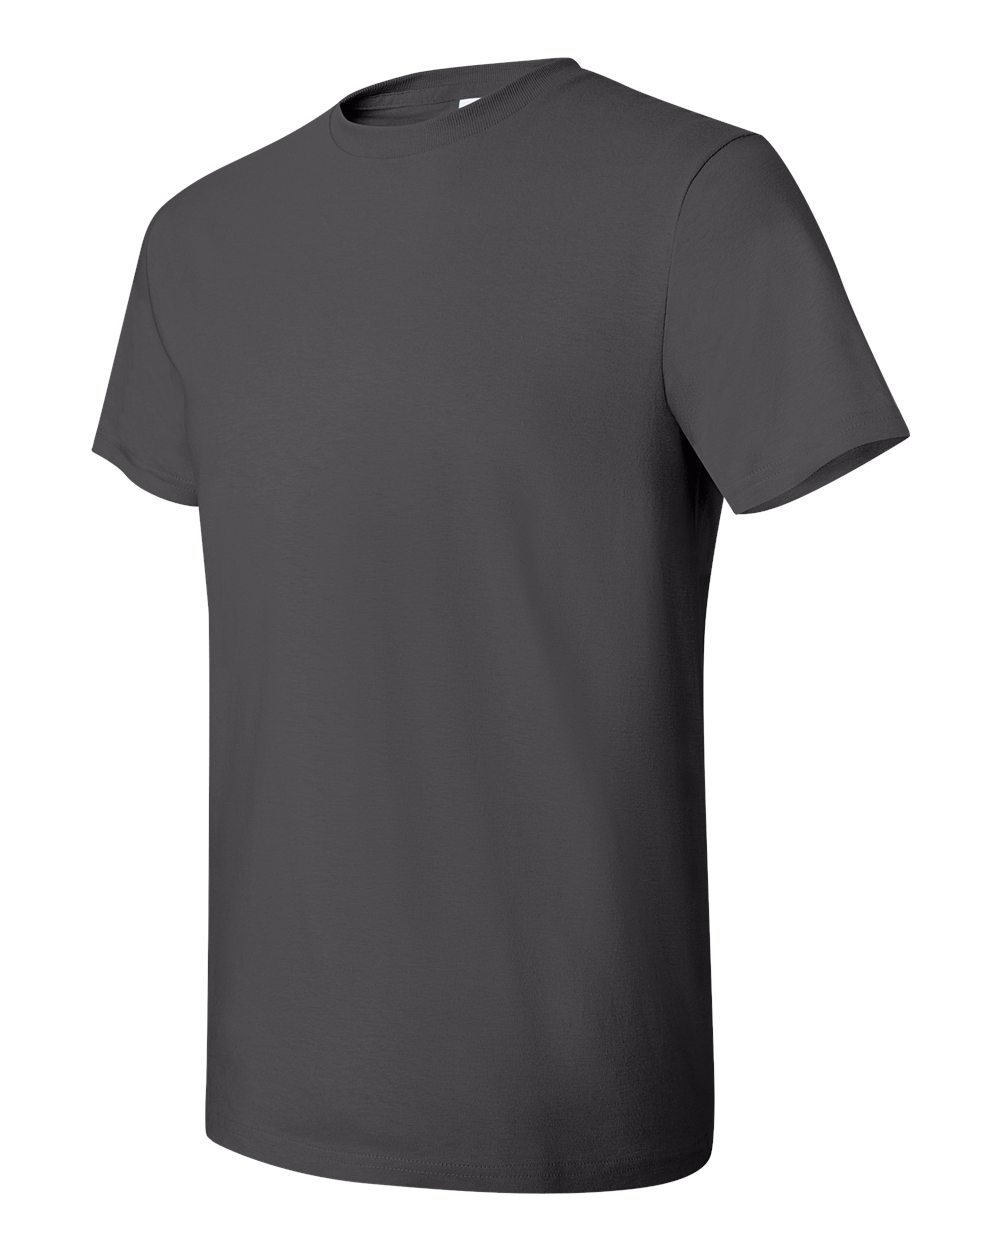 Hanes Men's Nano Premium Cotton T-Shirt (Pack of 2), Smoke Gray, Large